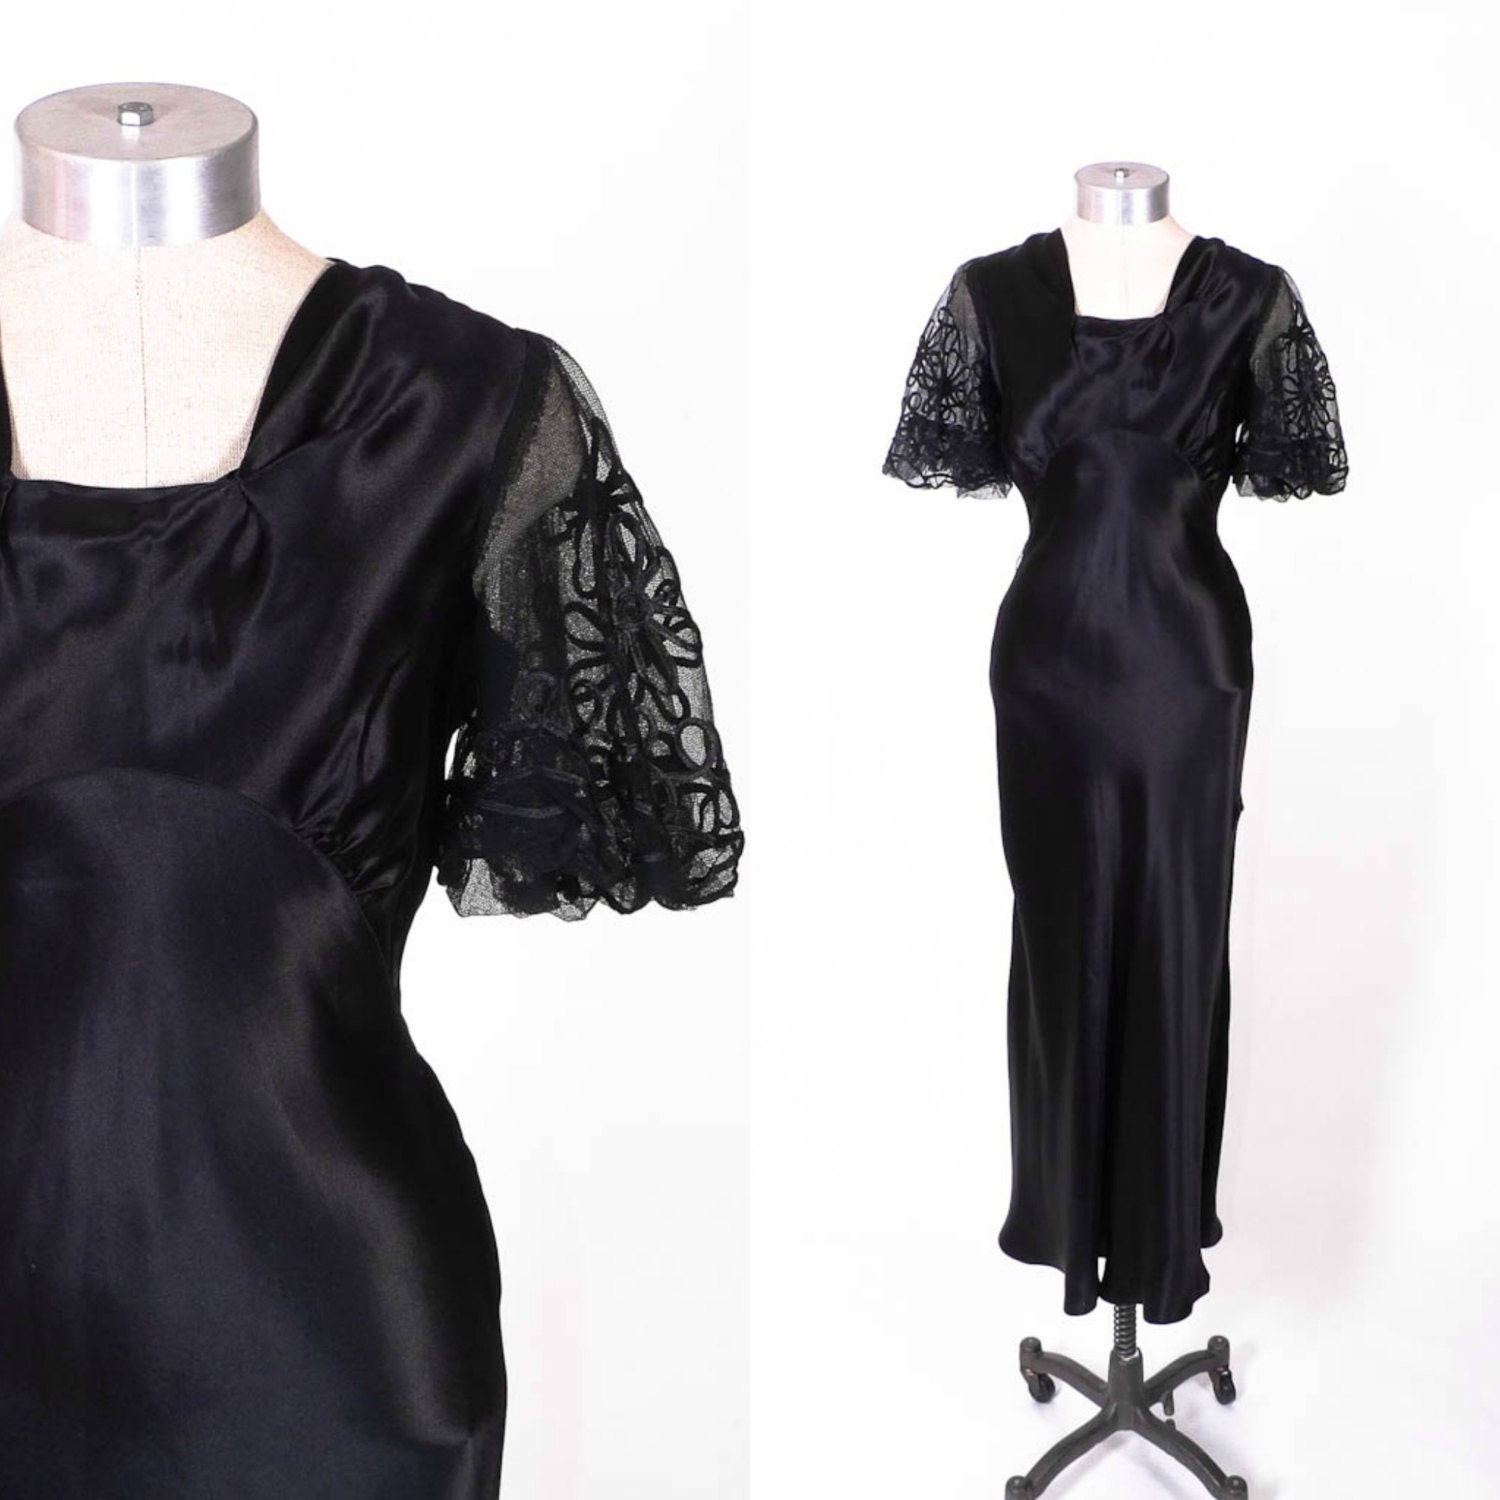 Vintage 30s Dress // 1930s Dress // Black Bias Cut Dress